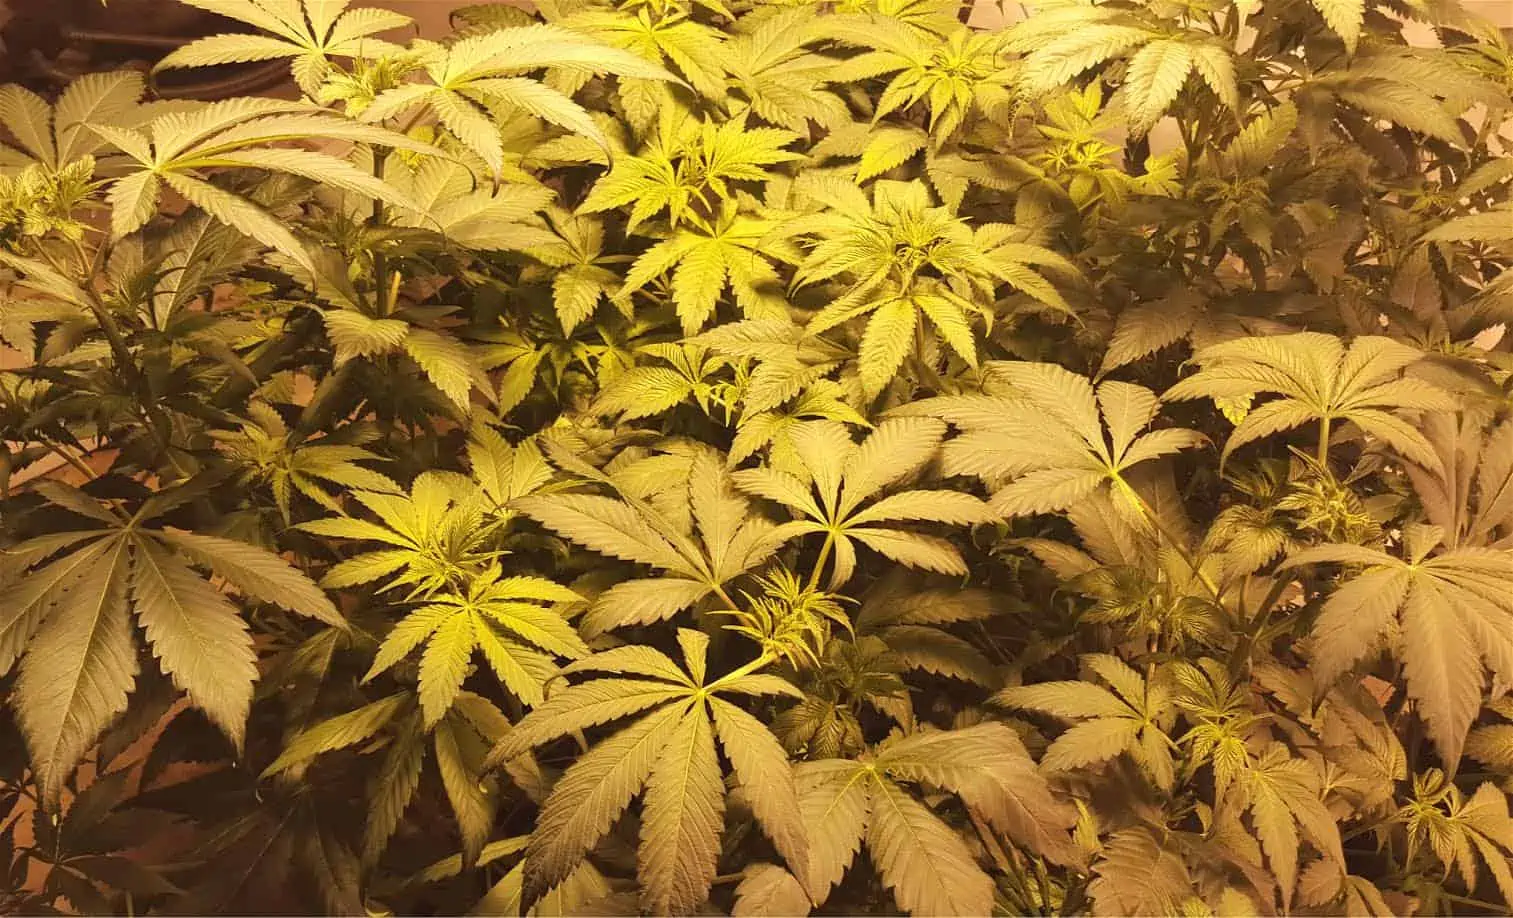 Cannabis Cultivation 101: Lighting